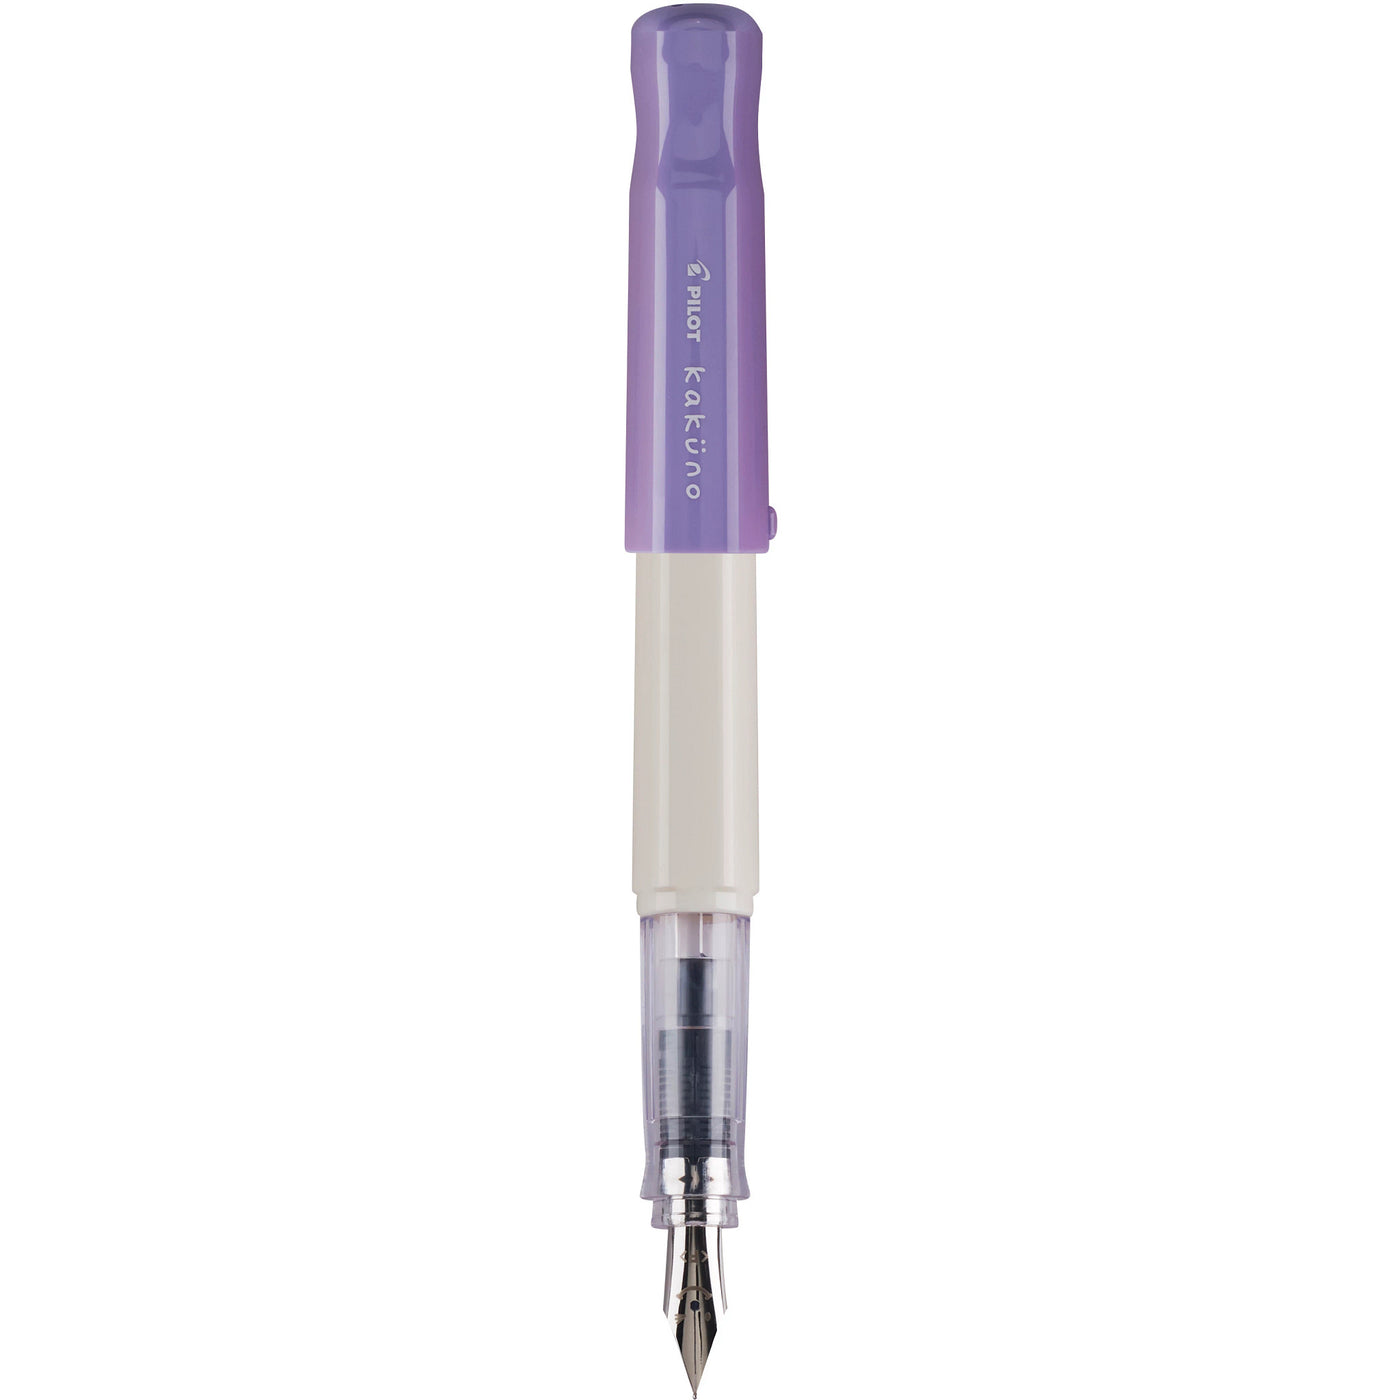 Pilot Kakuno Fountain Pen - White & Purple | Atlas Stationers.